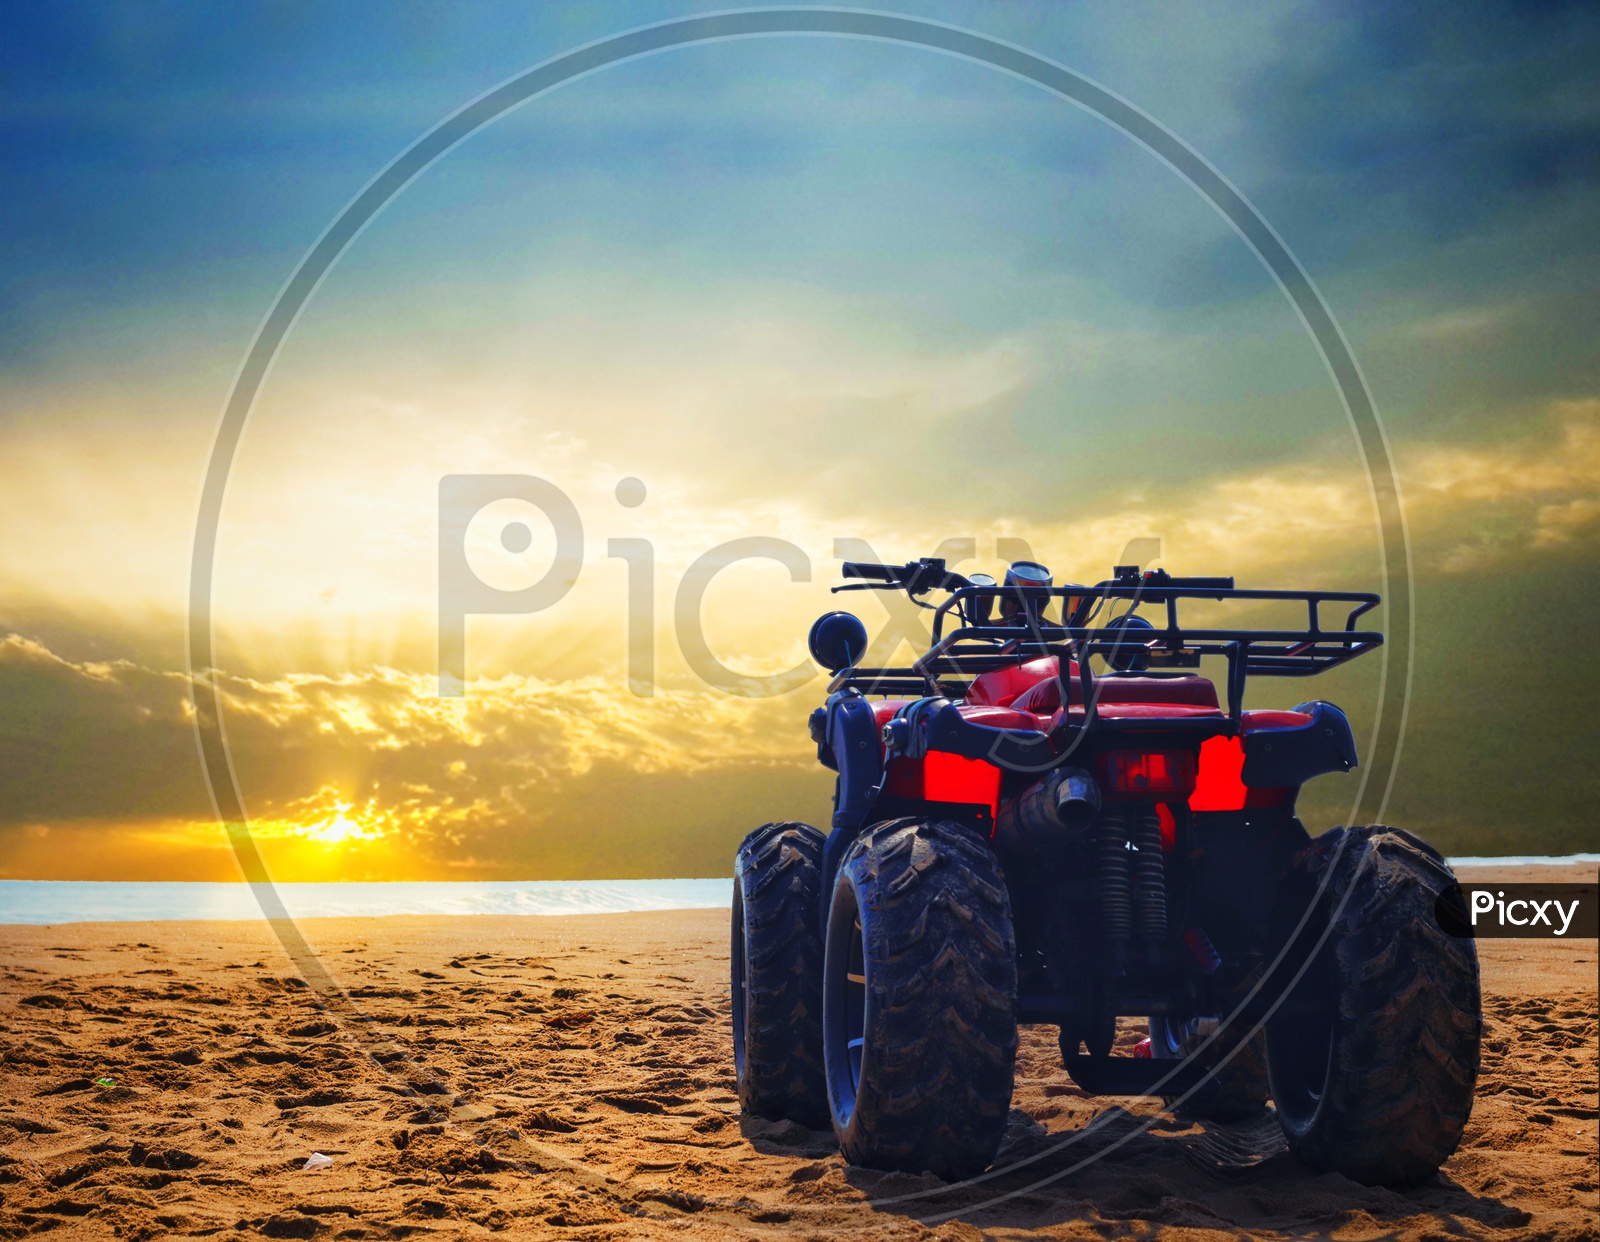 Four Wheeler Dirt Bike On Sand Of Sea Beach During Sunrise With Dramatic Colourful Sky